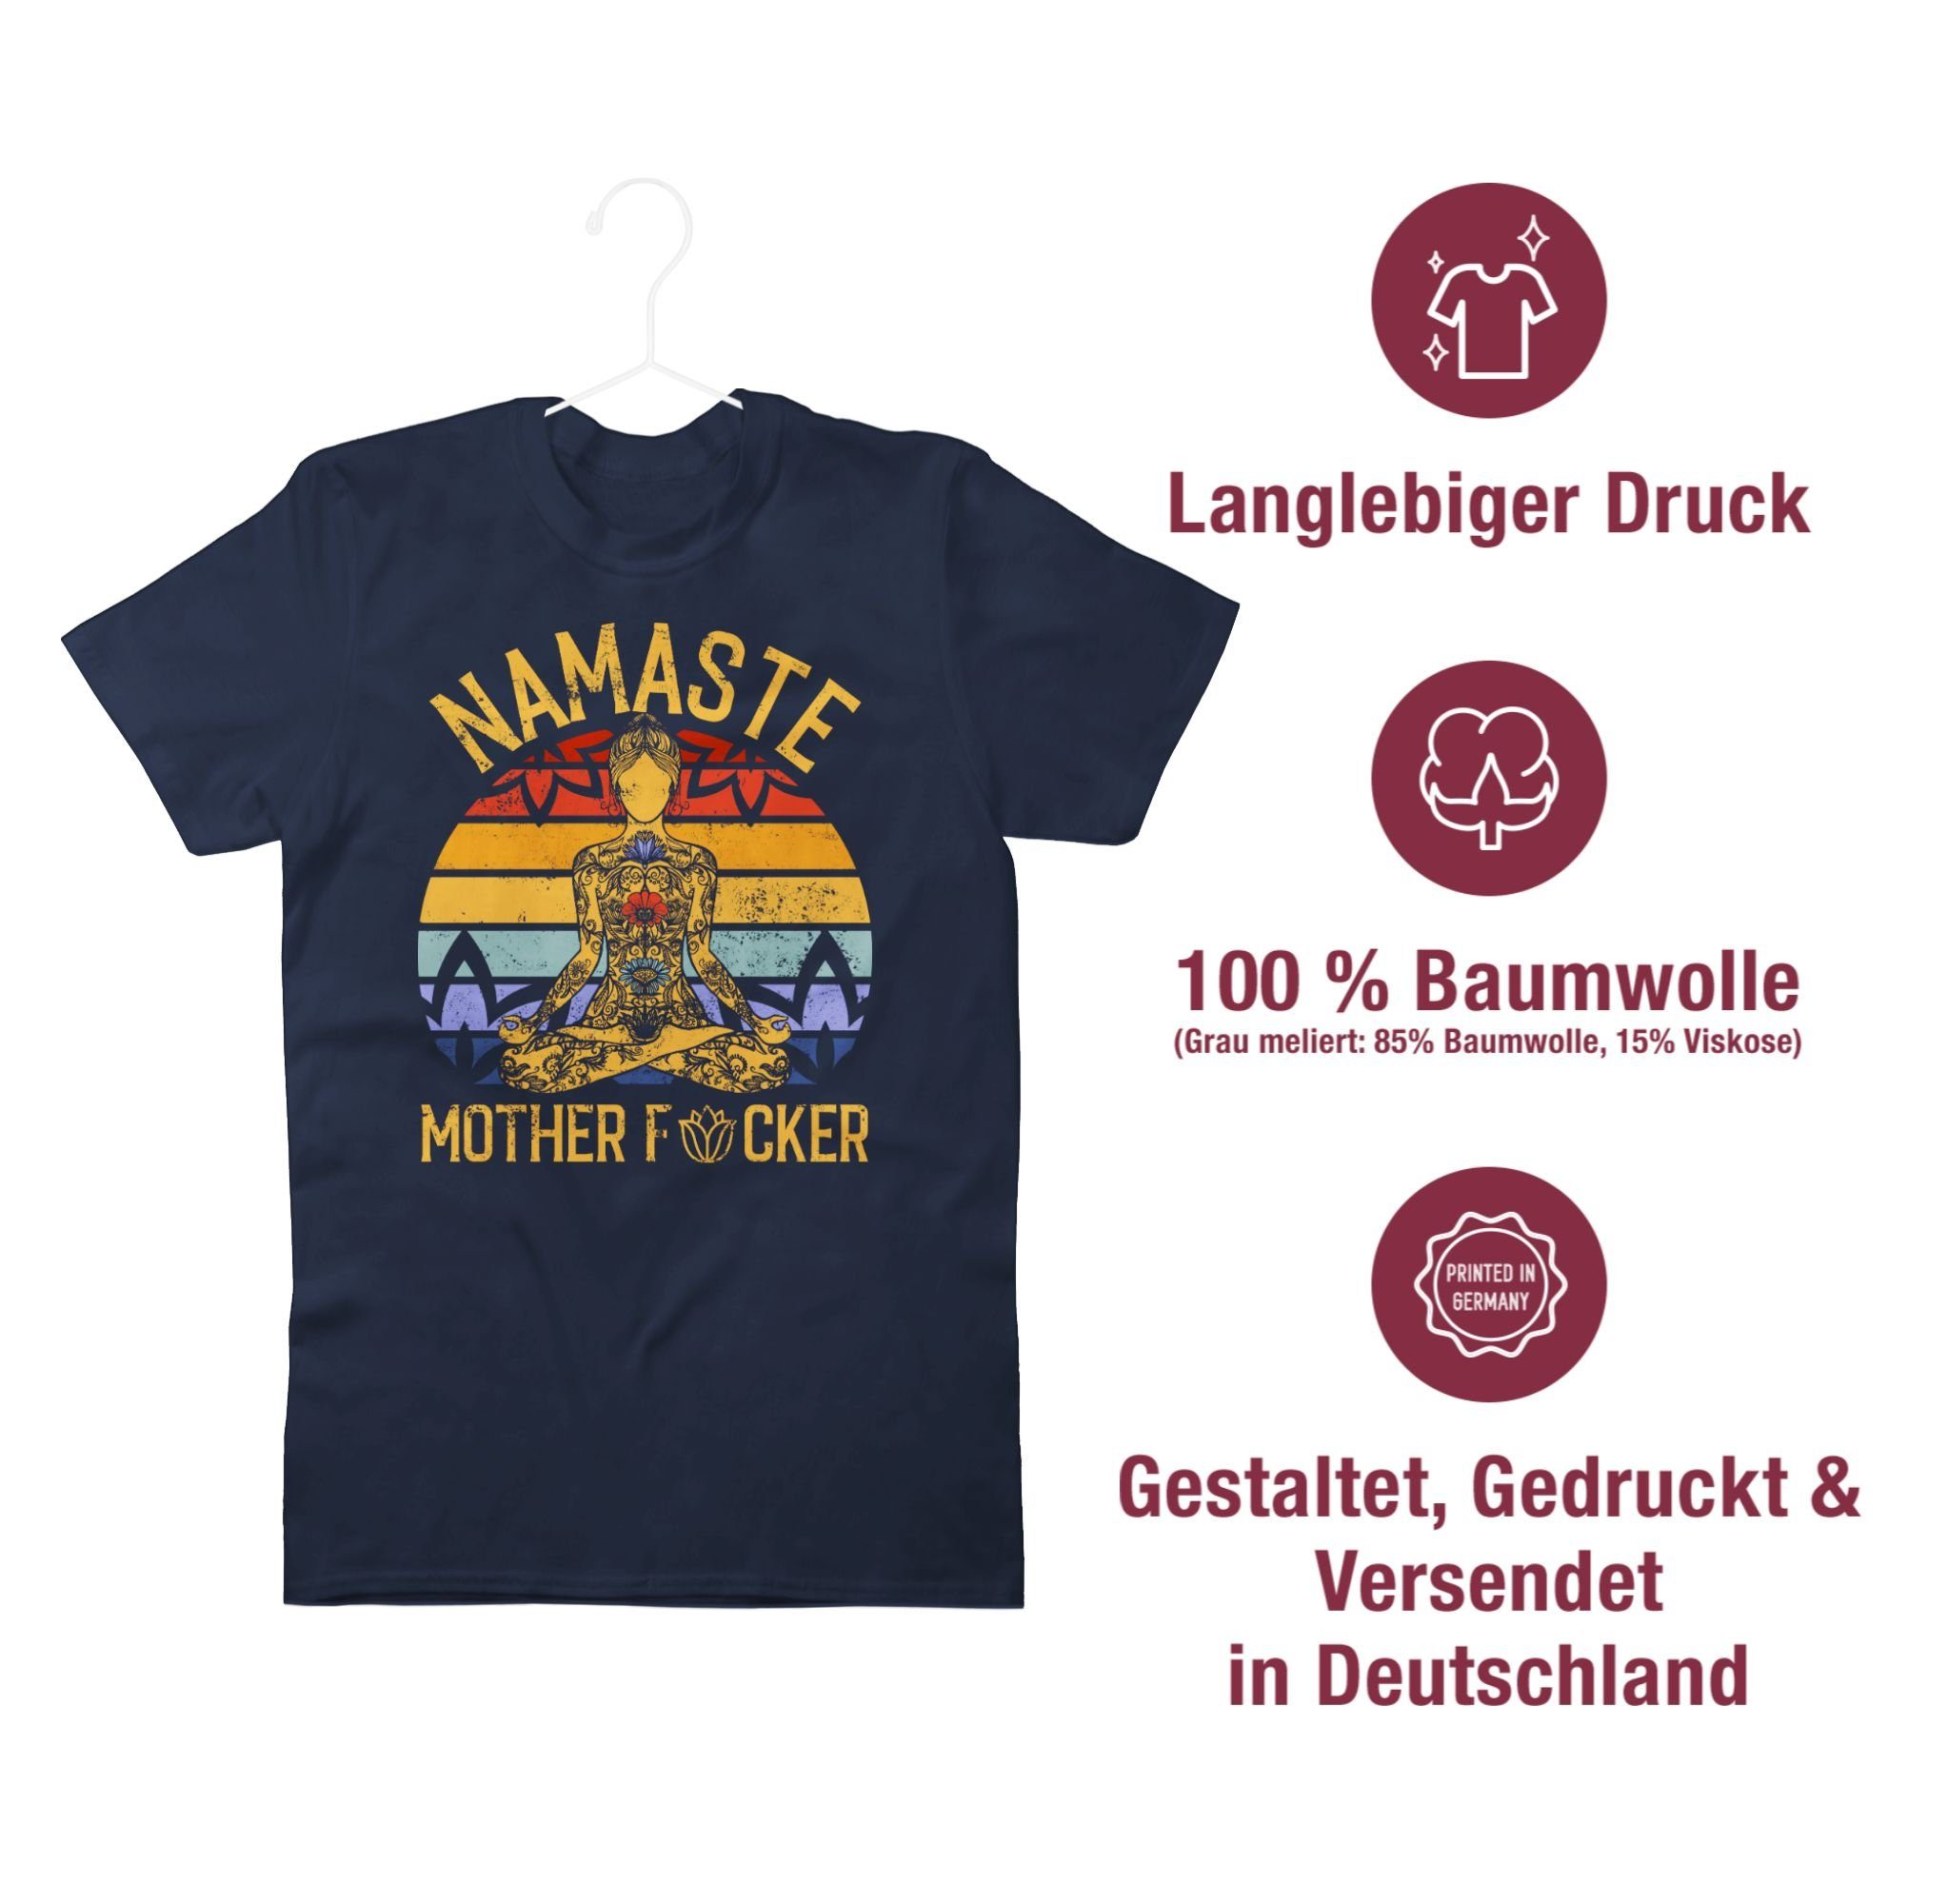 Shirtracer T-Shirt Namaste Mother Yoga Navy Wellness und Blau 03 Geschenk